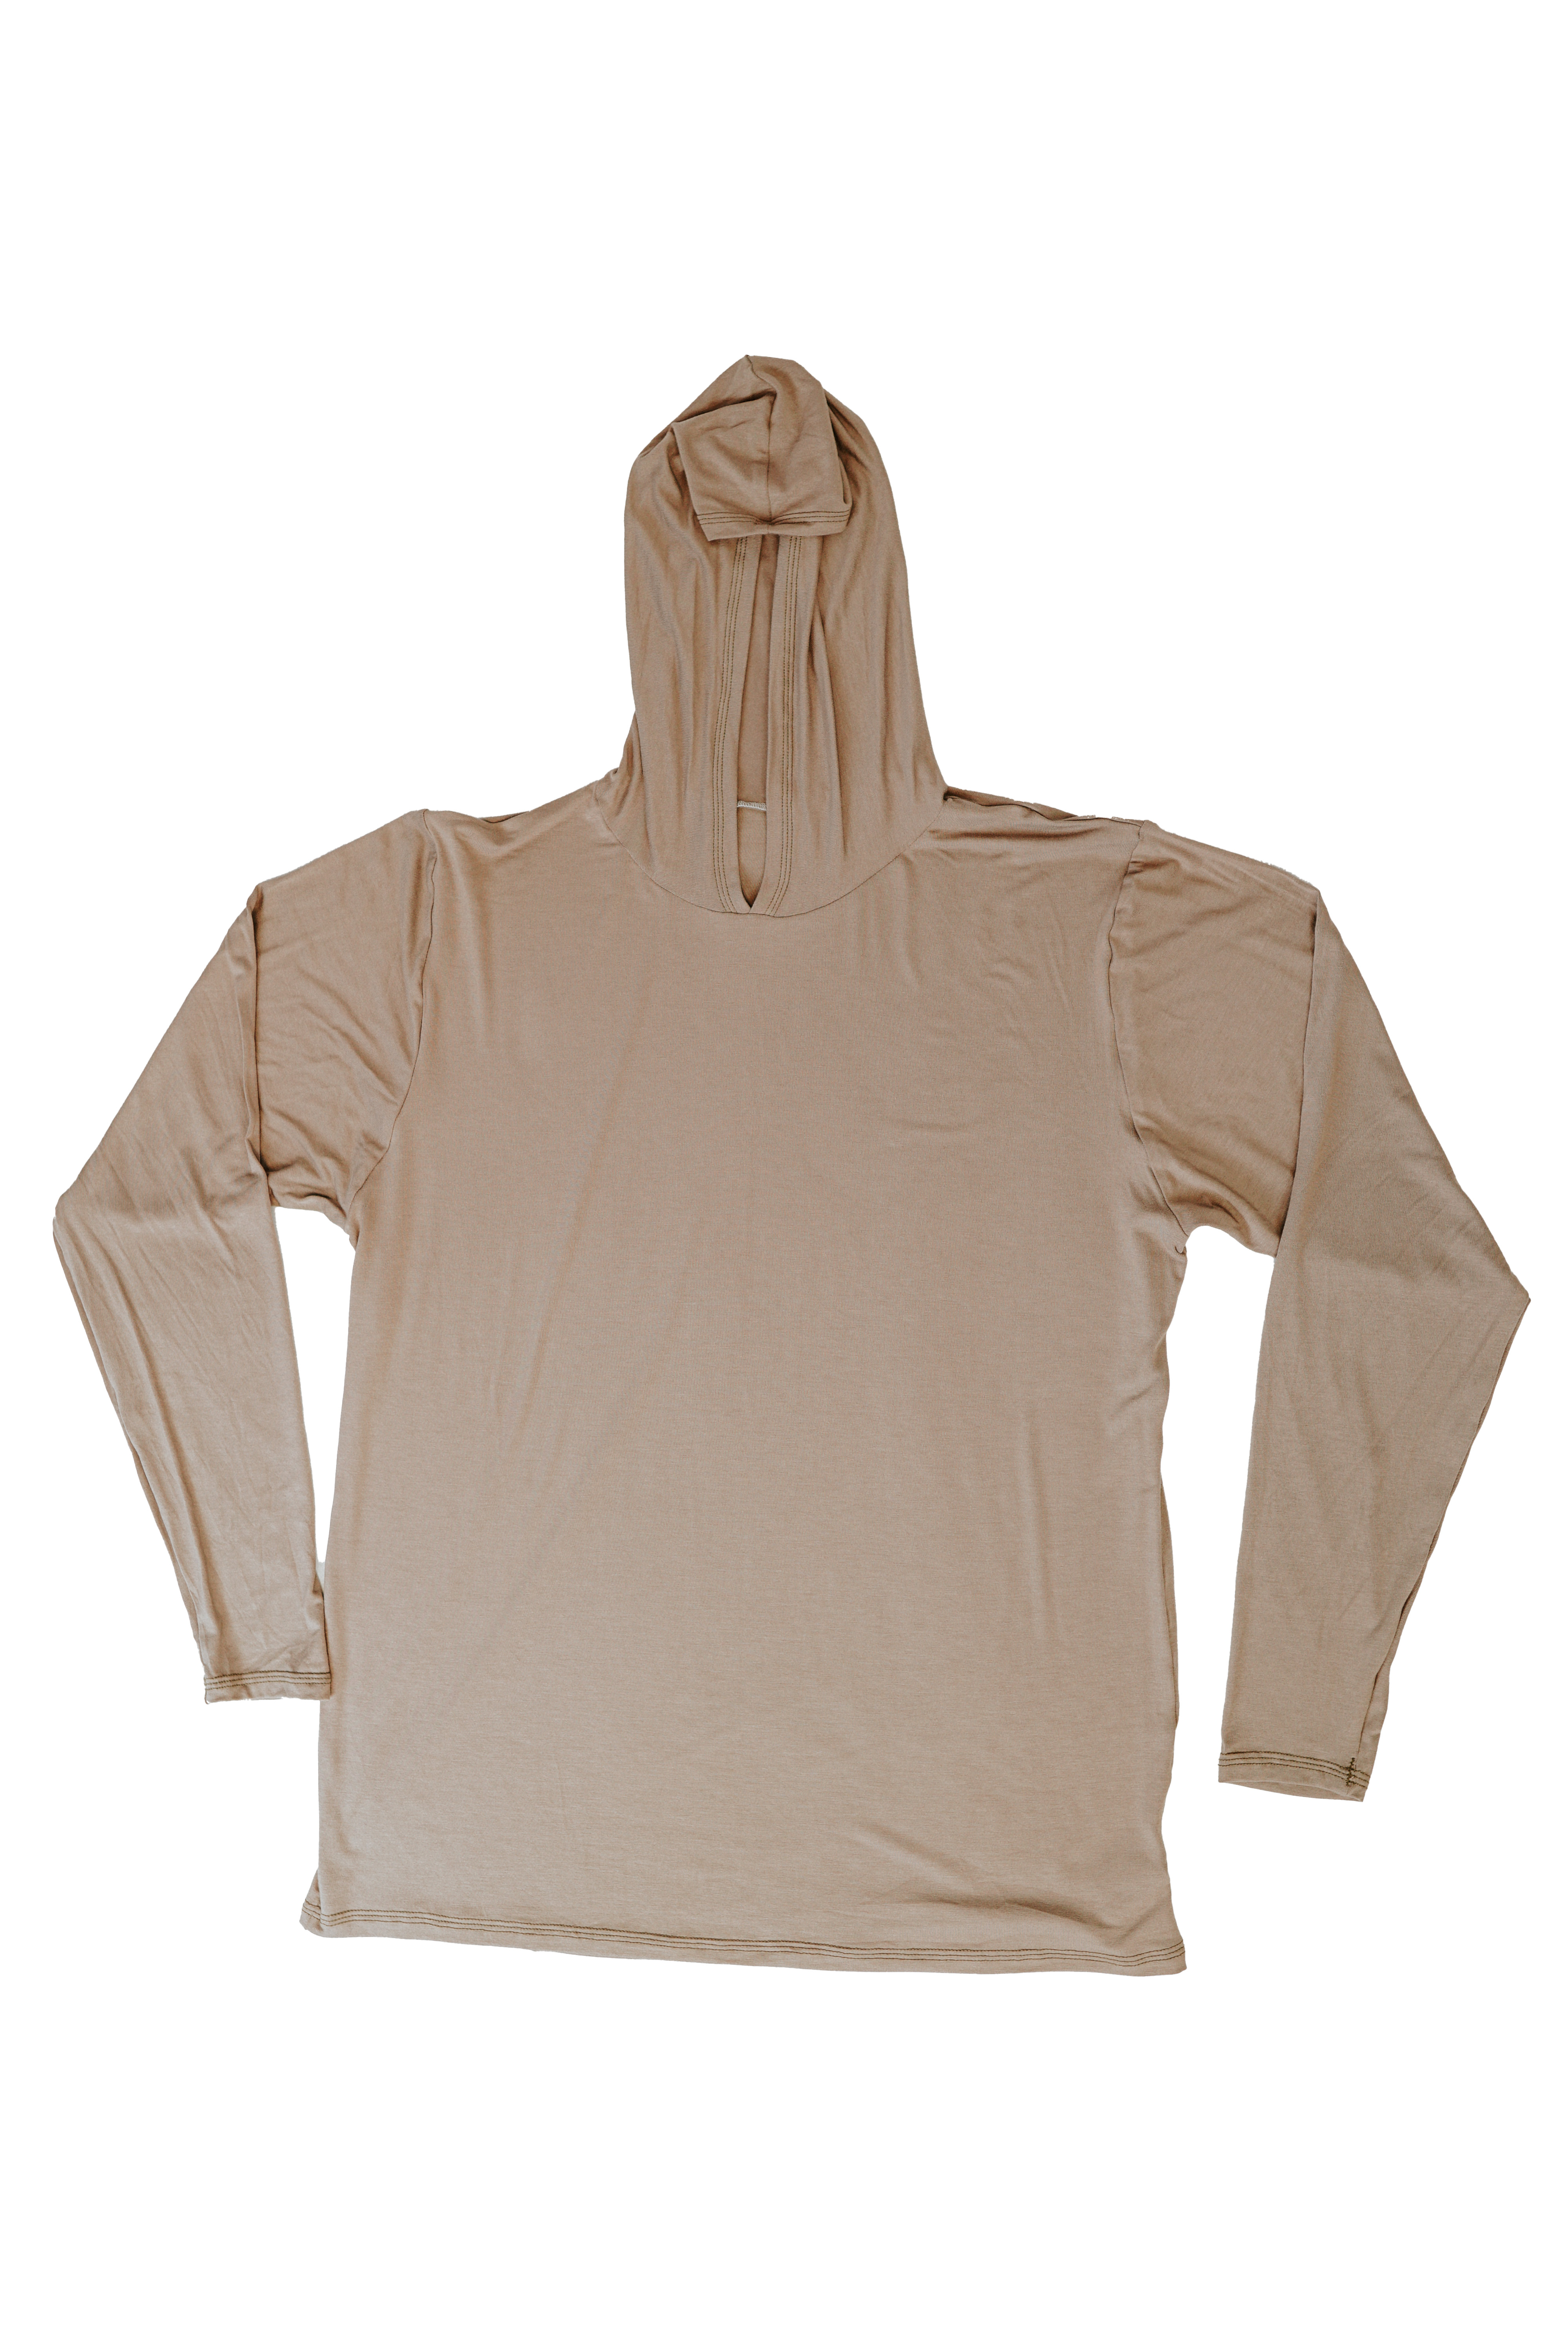 Unisex Hooded Sun Shirt  UPF+ UV Protection Shirt Made in USA